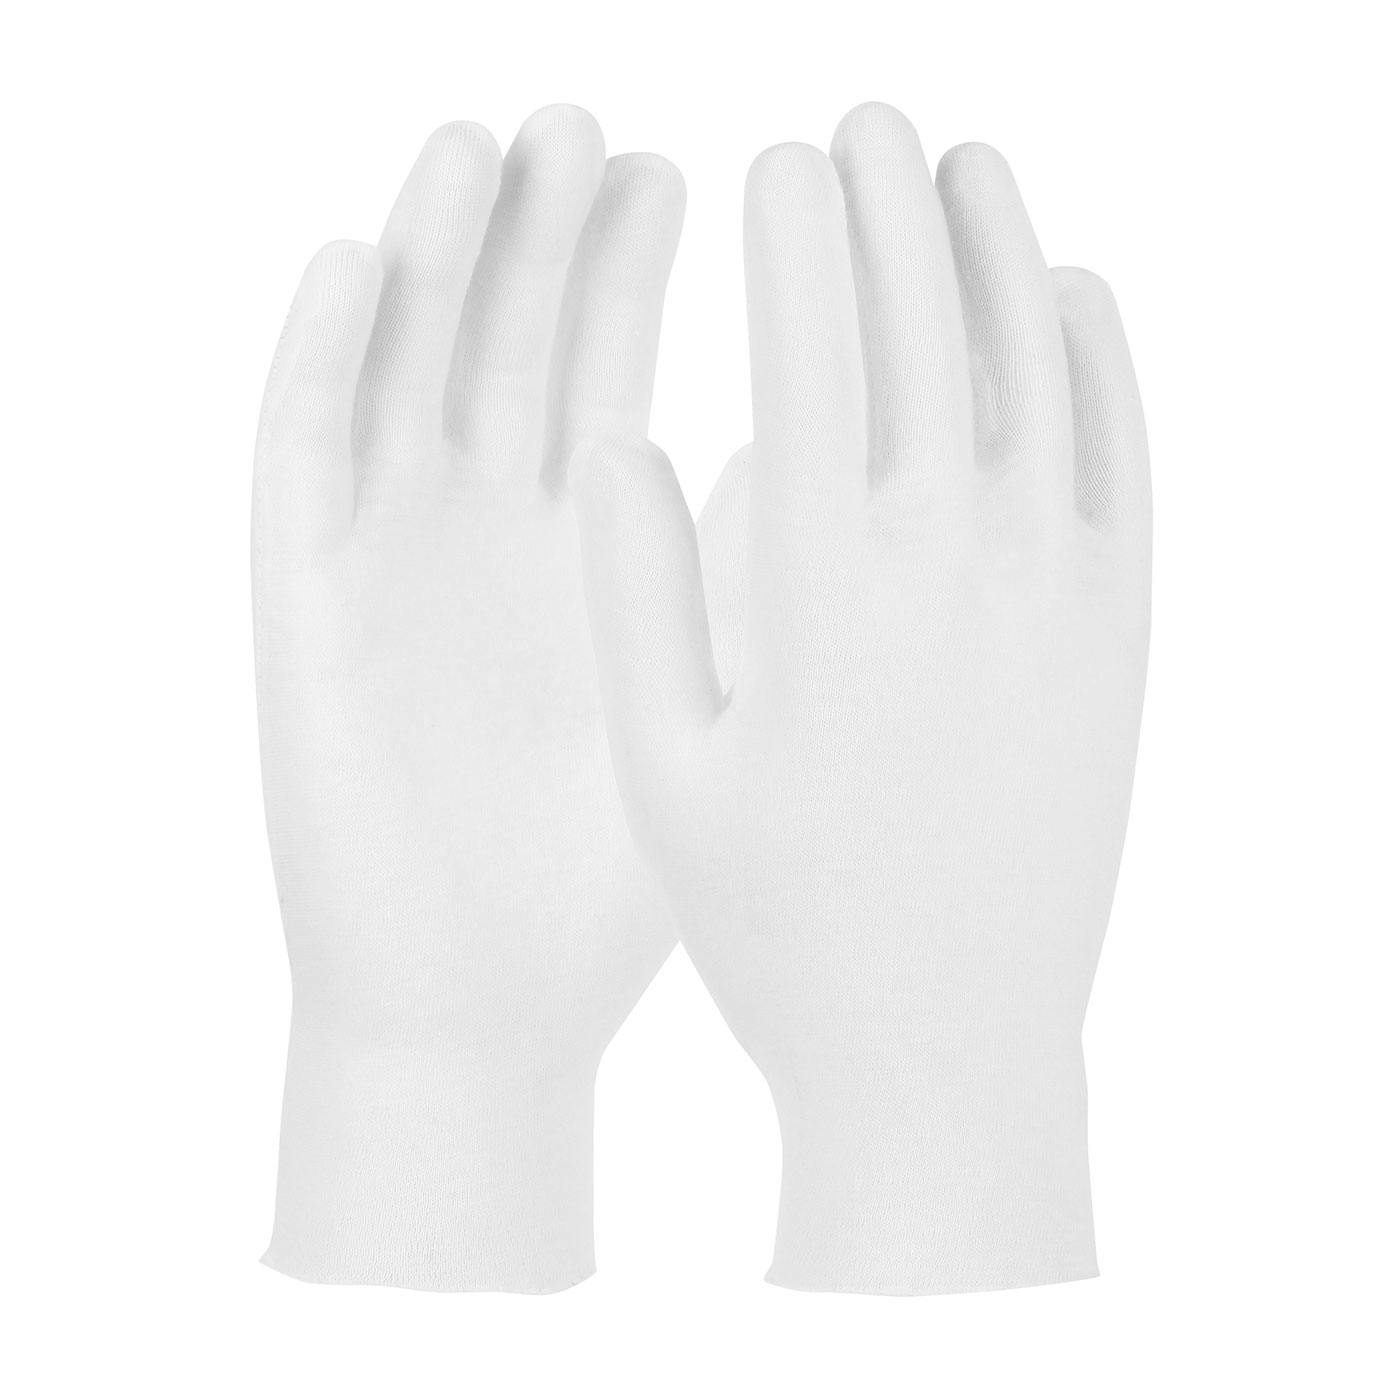 Premium, Light Weight Cotton Lisle Inspection Glove with Unhemmed Cuff - 10.5", White (97-501/10) - LADIES